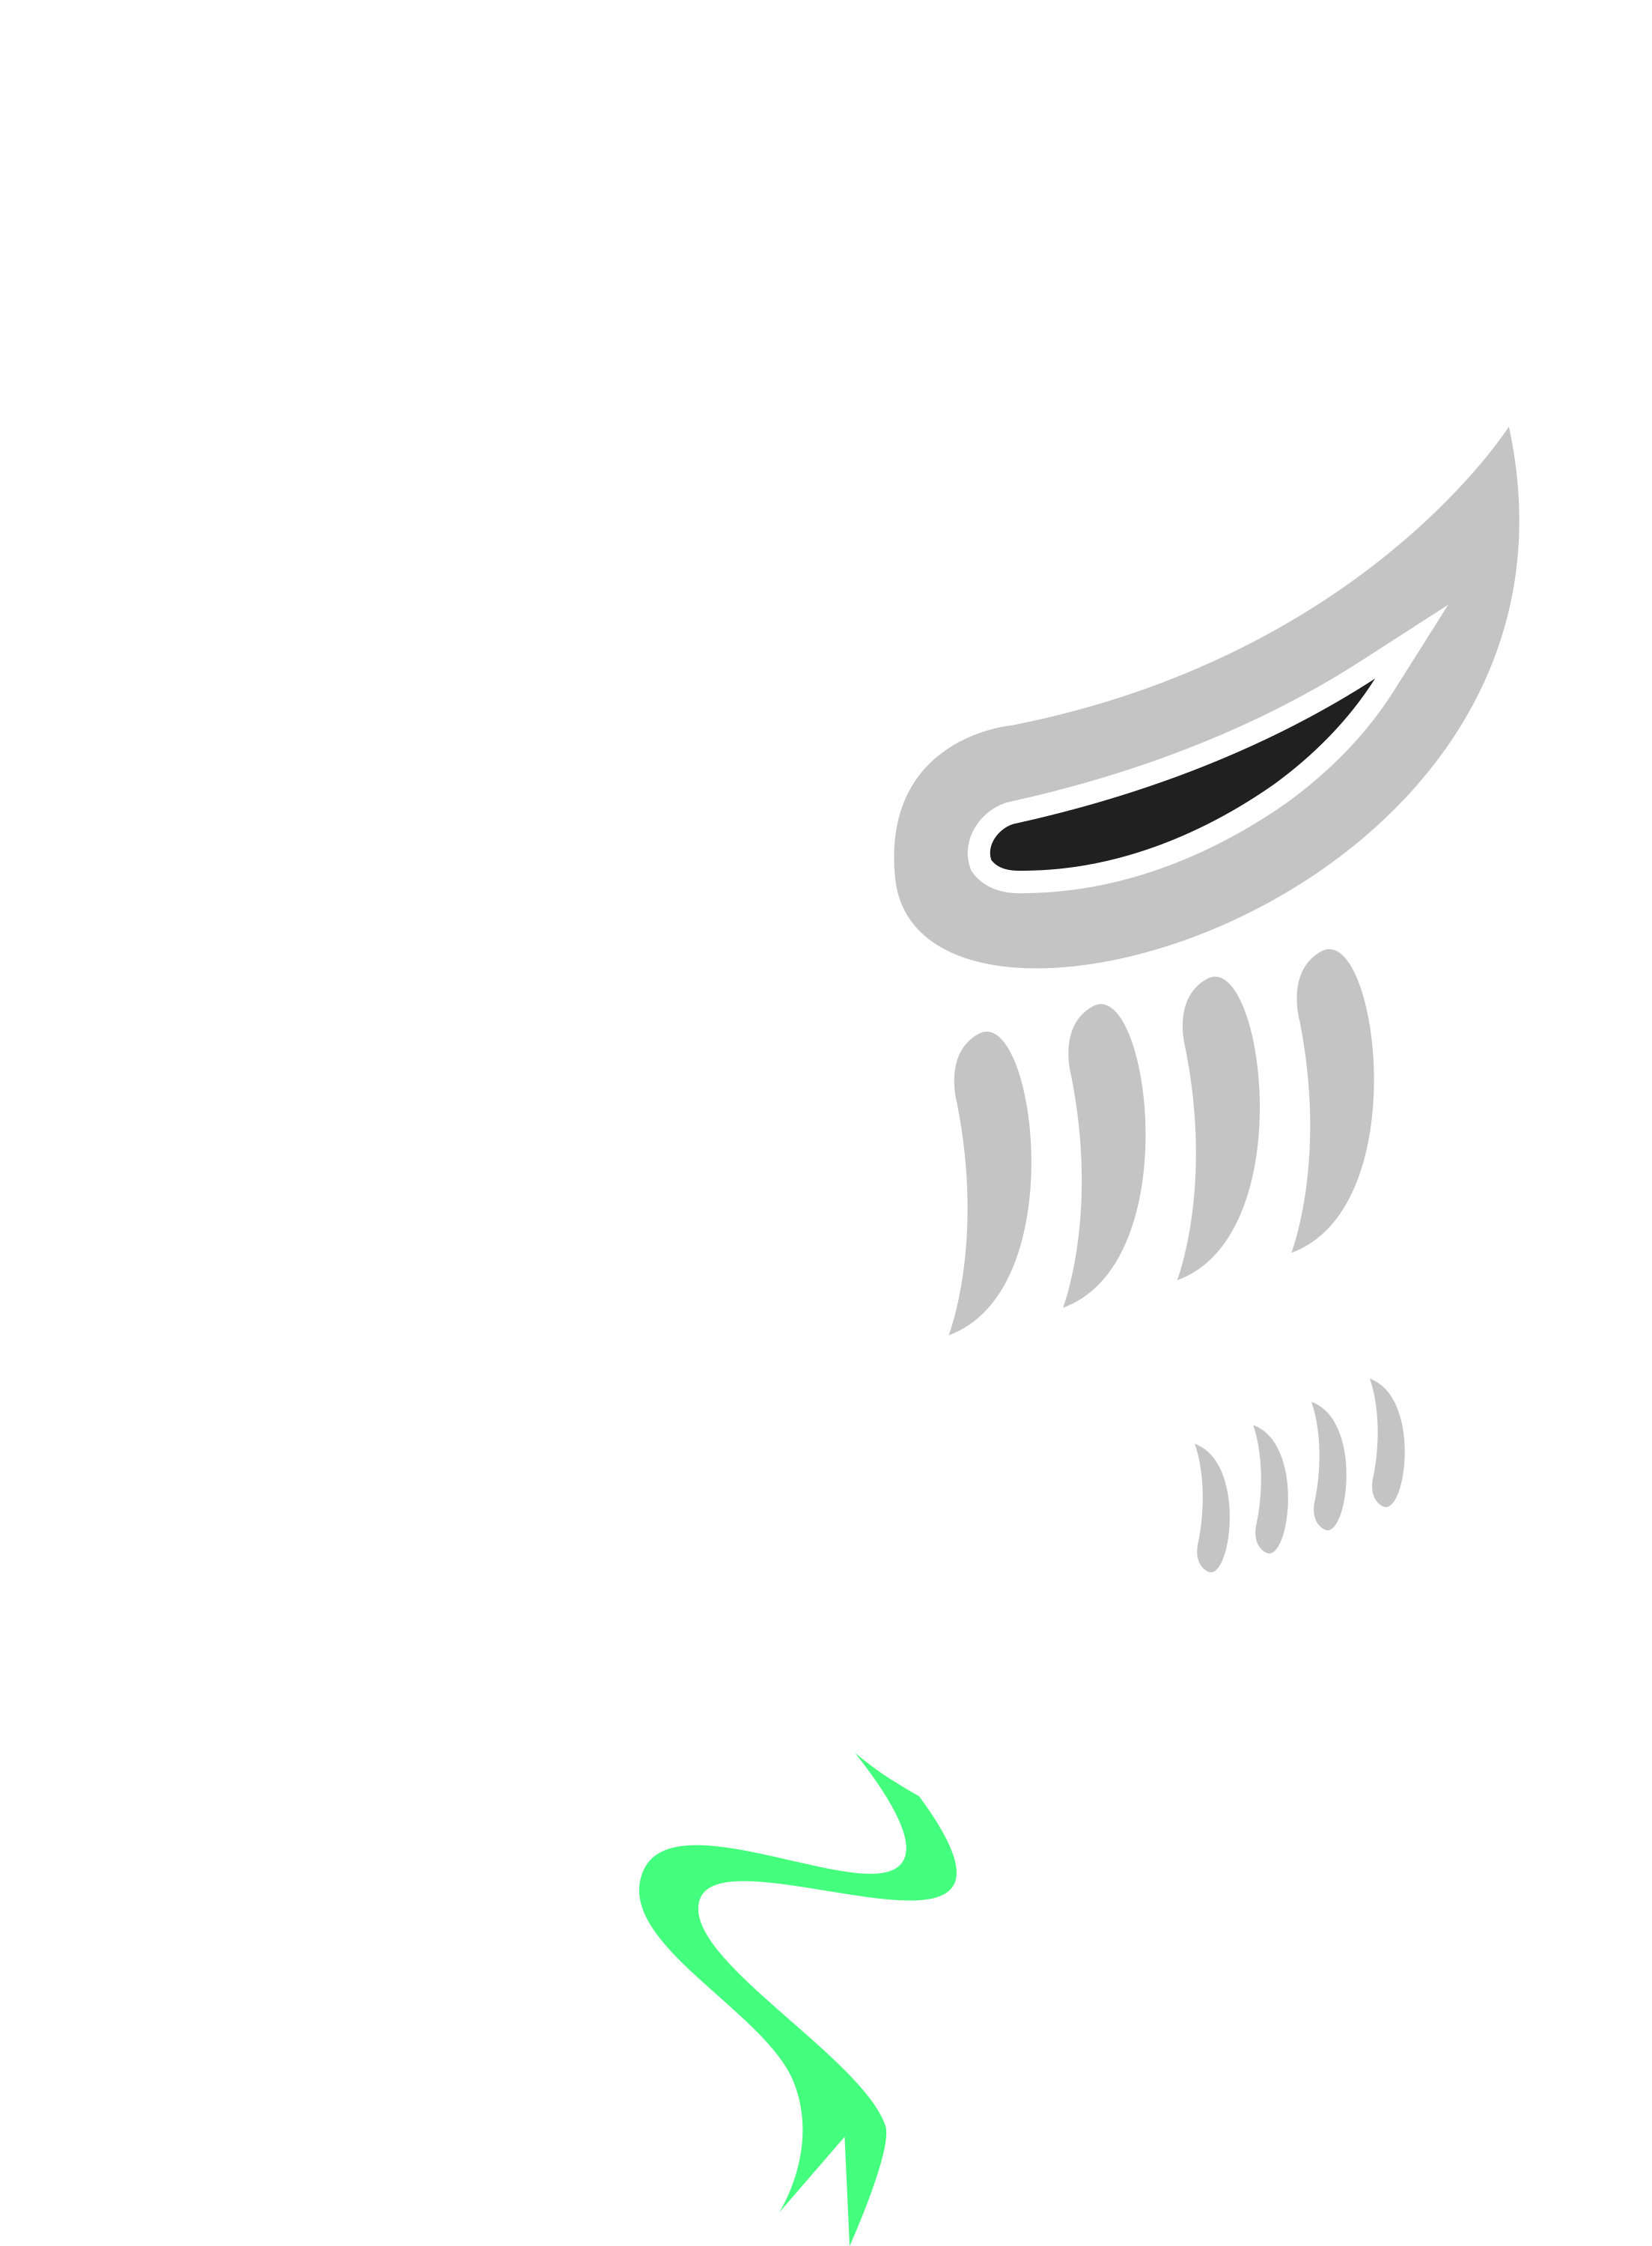 Bullet Club (Demon) Logo 2 by DarkVoidPictures on DeviantArt